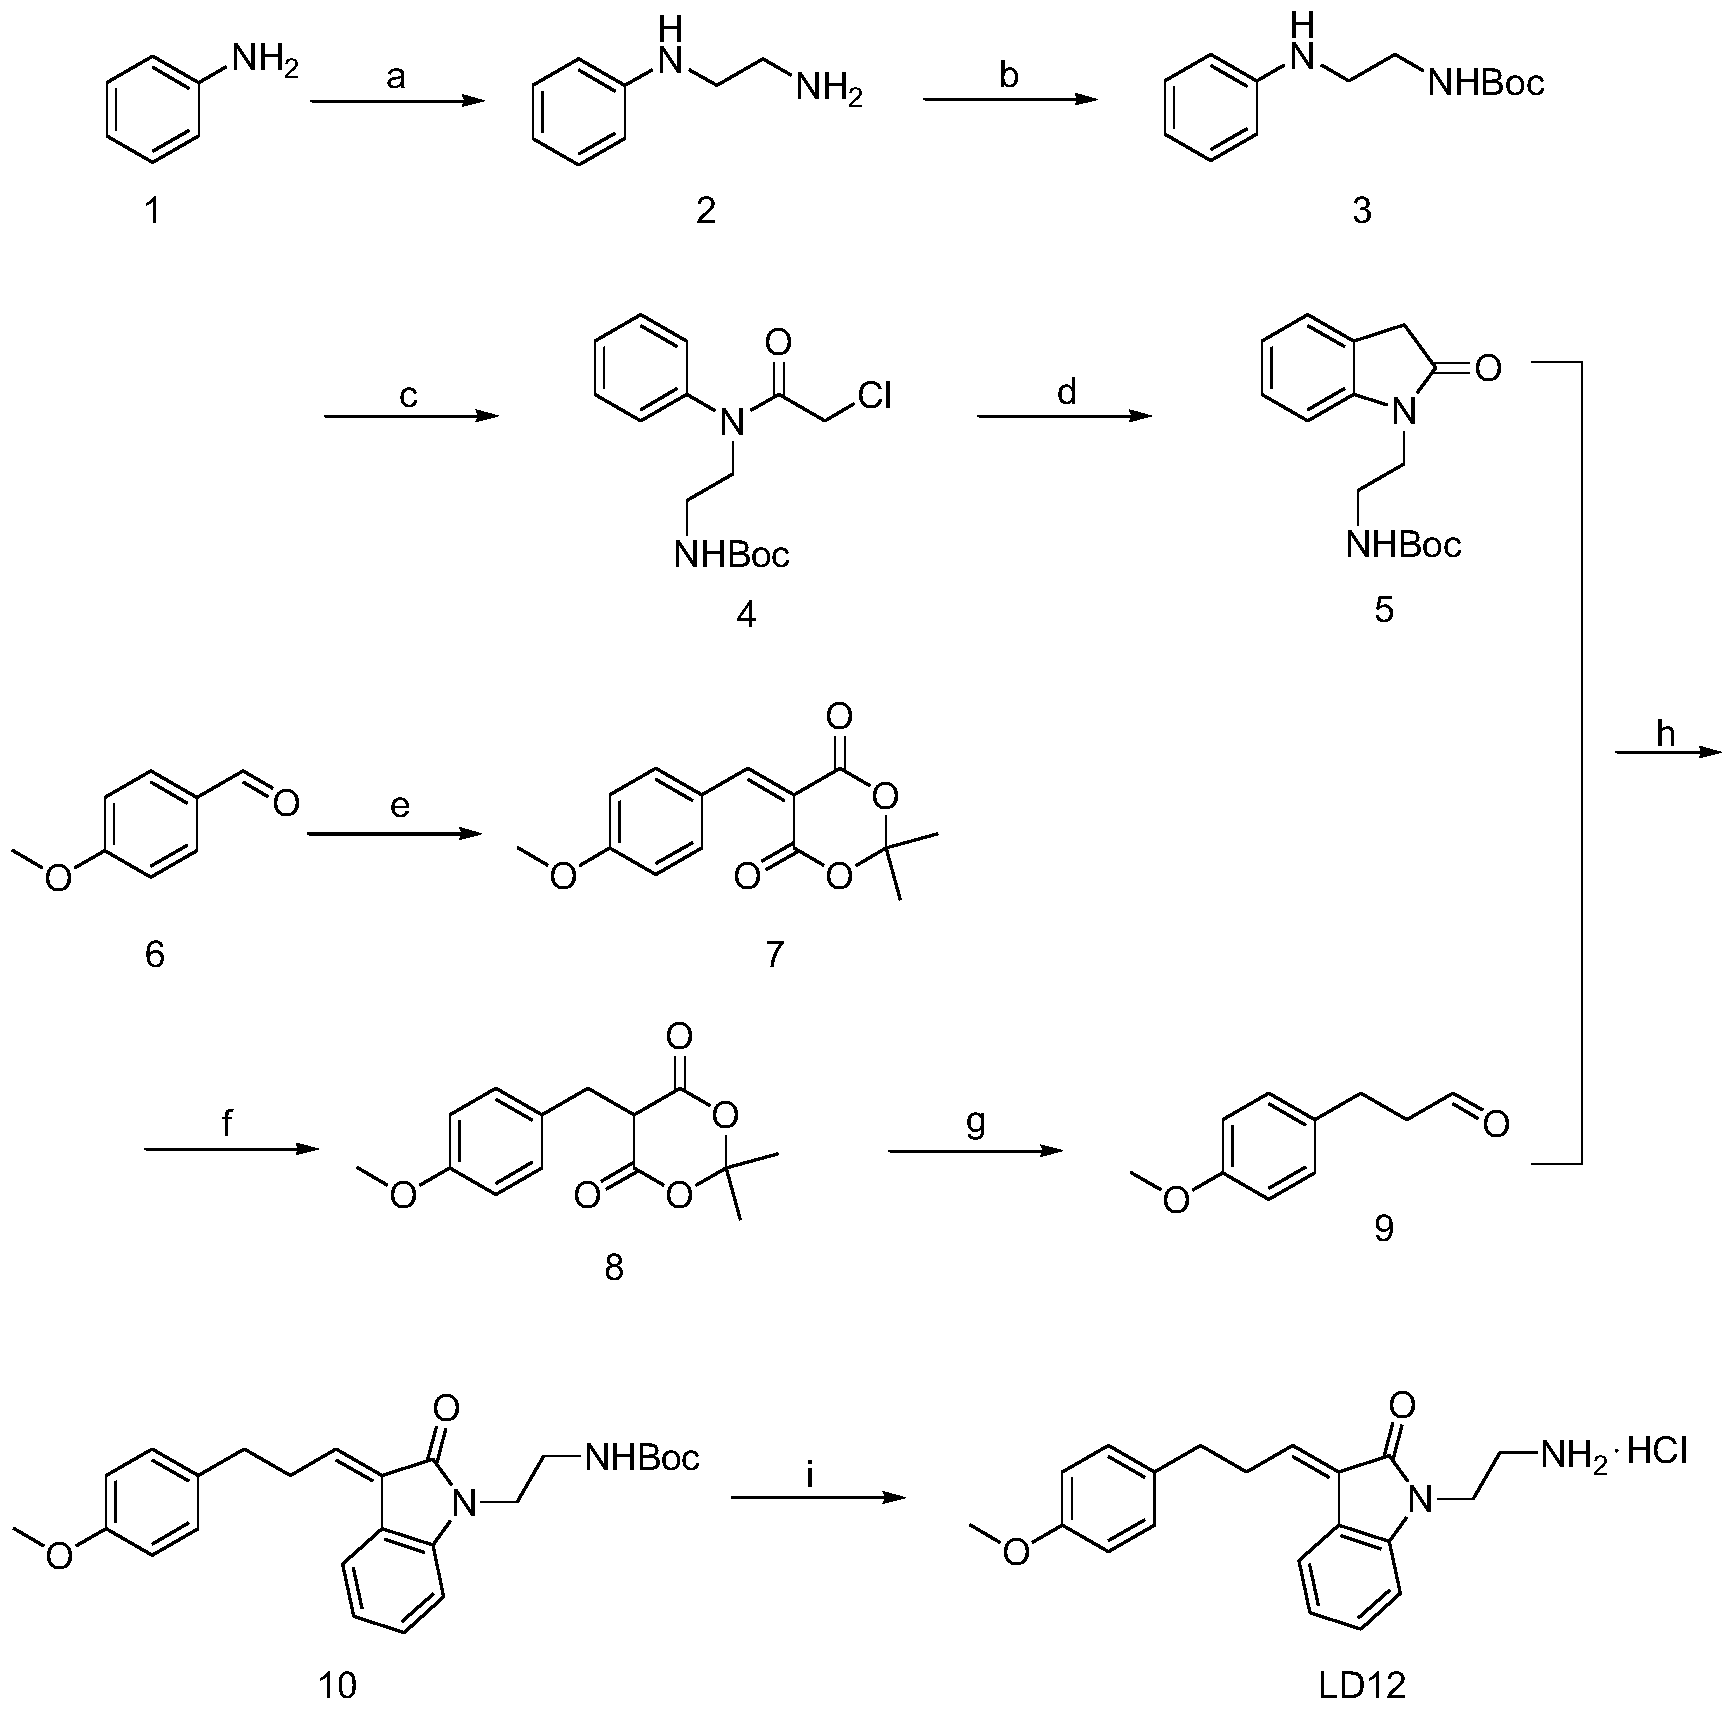 Dual-channel inhibitor using Raf/MEK/ERK and PI3K/Akt as targets